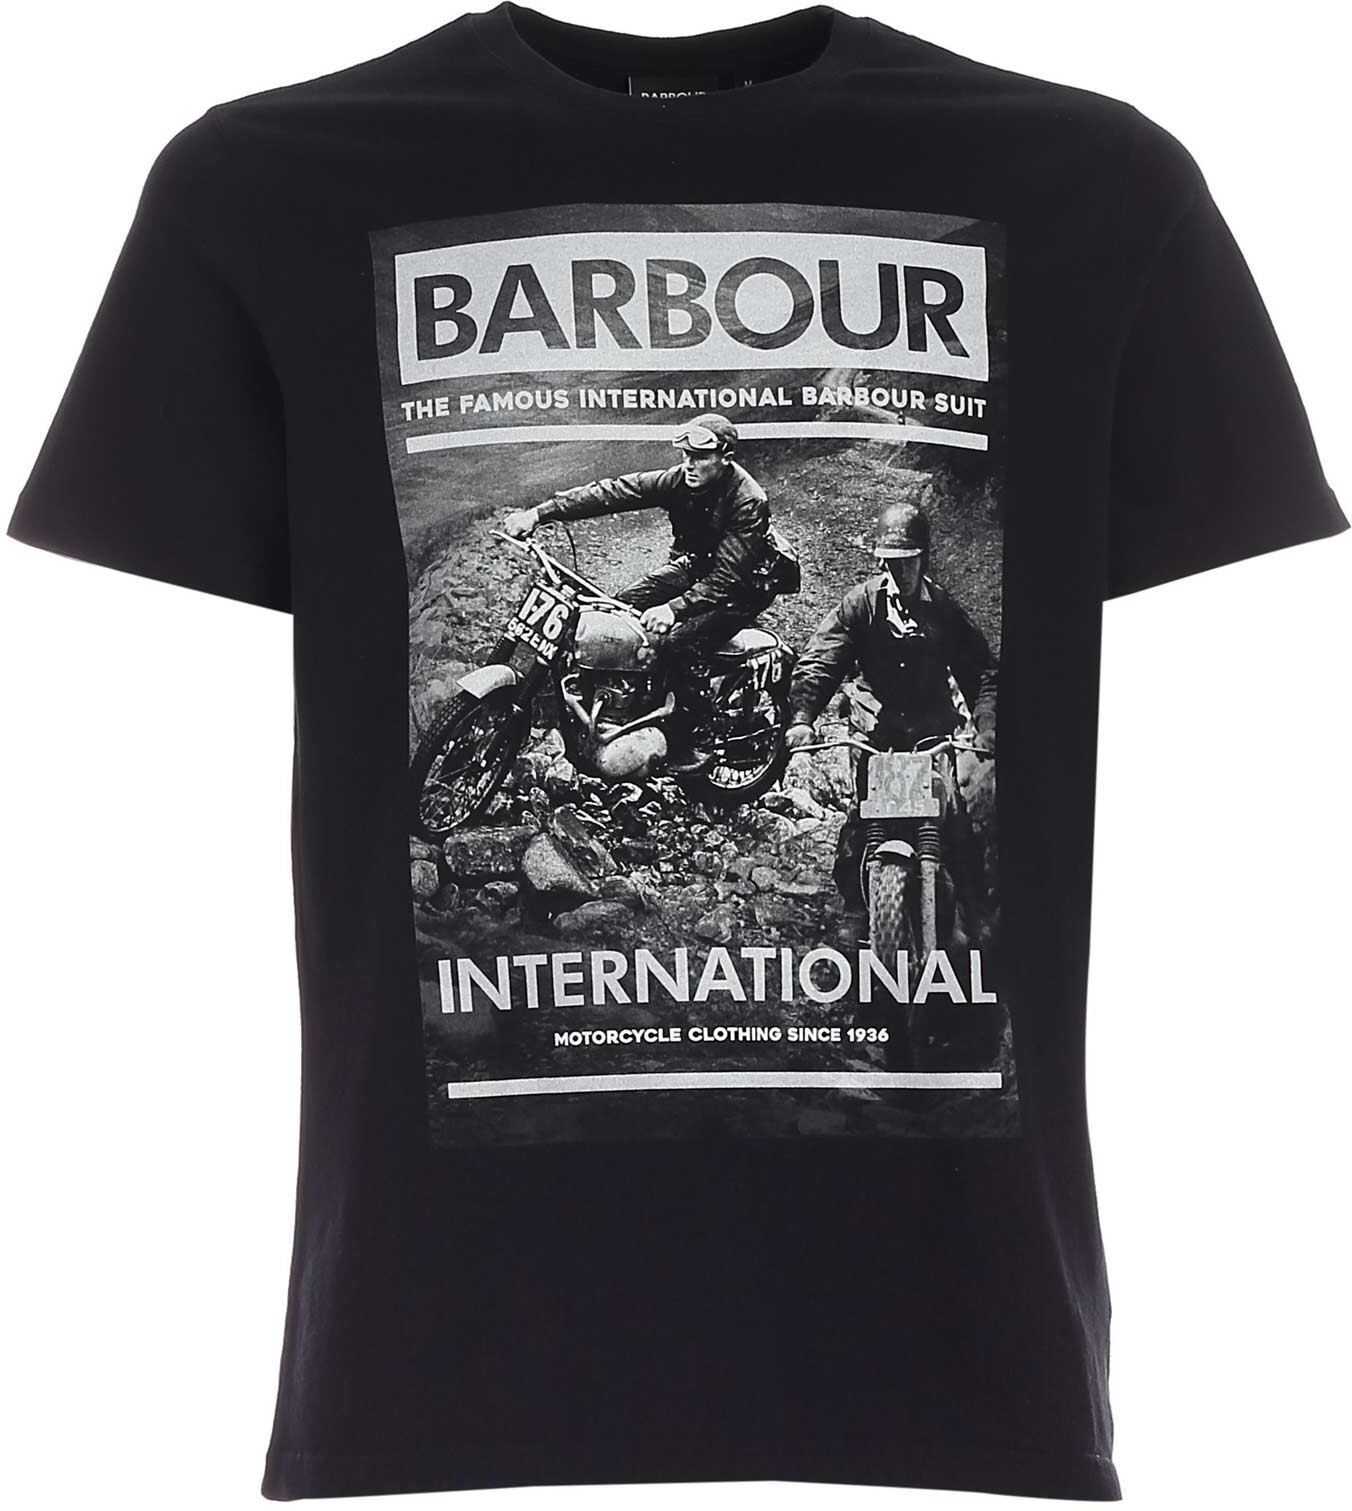 Barbour Contrasting Print T-Shirt In Black MTS0838BK31 Black